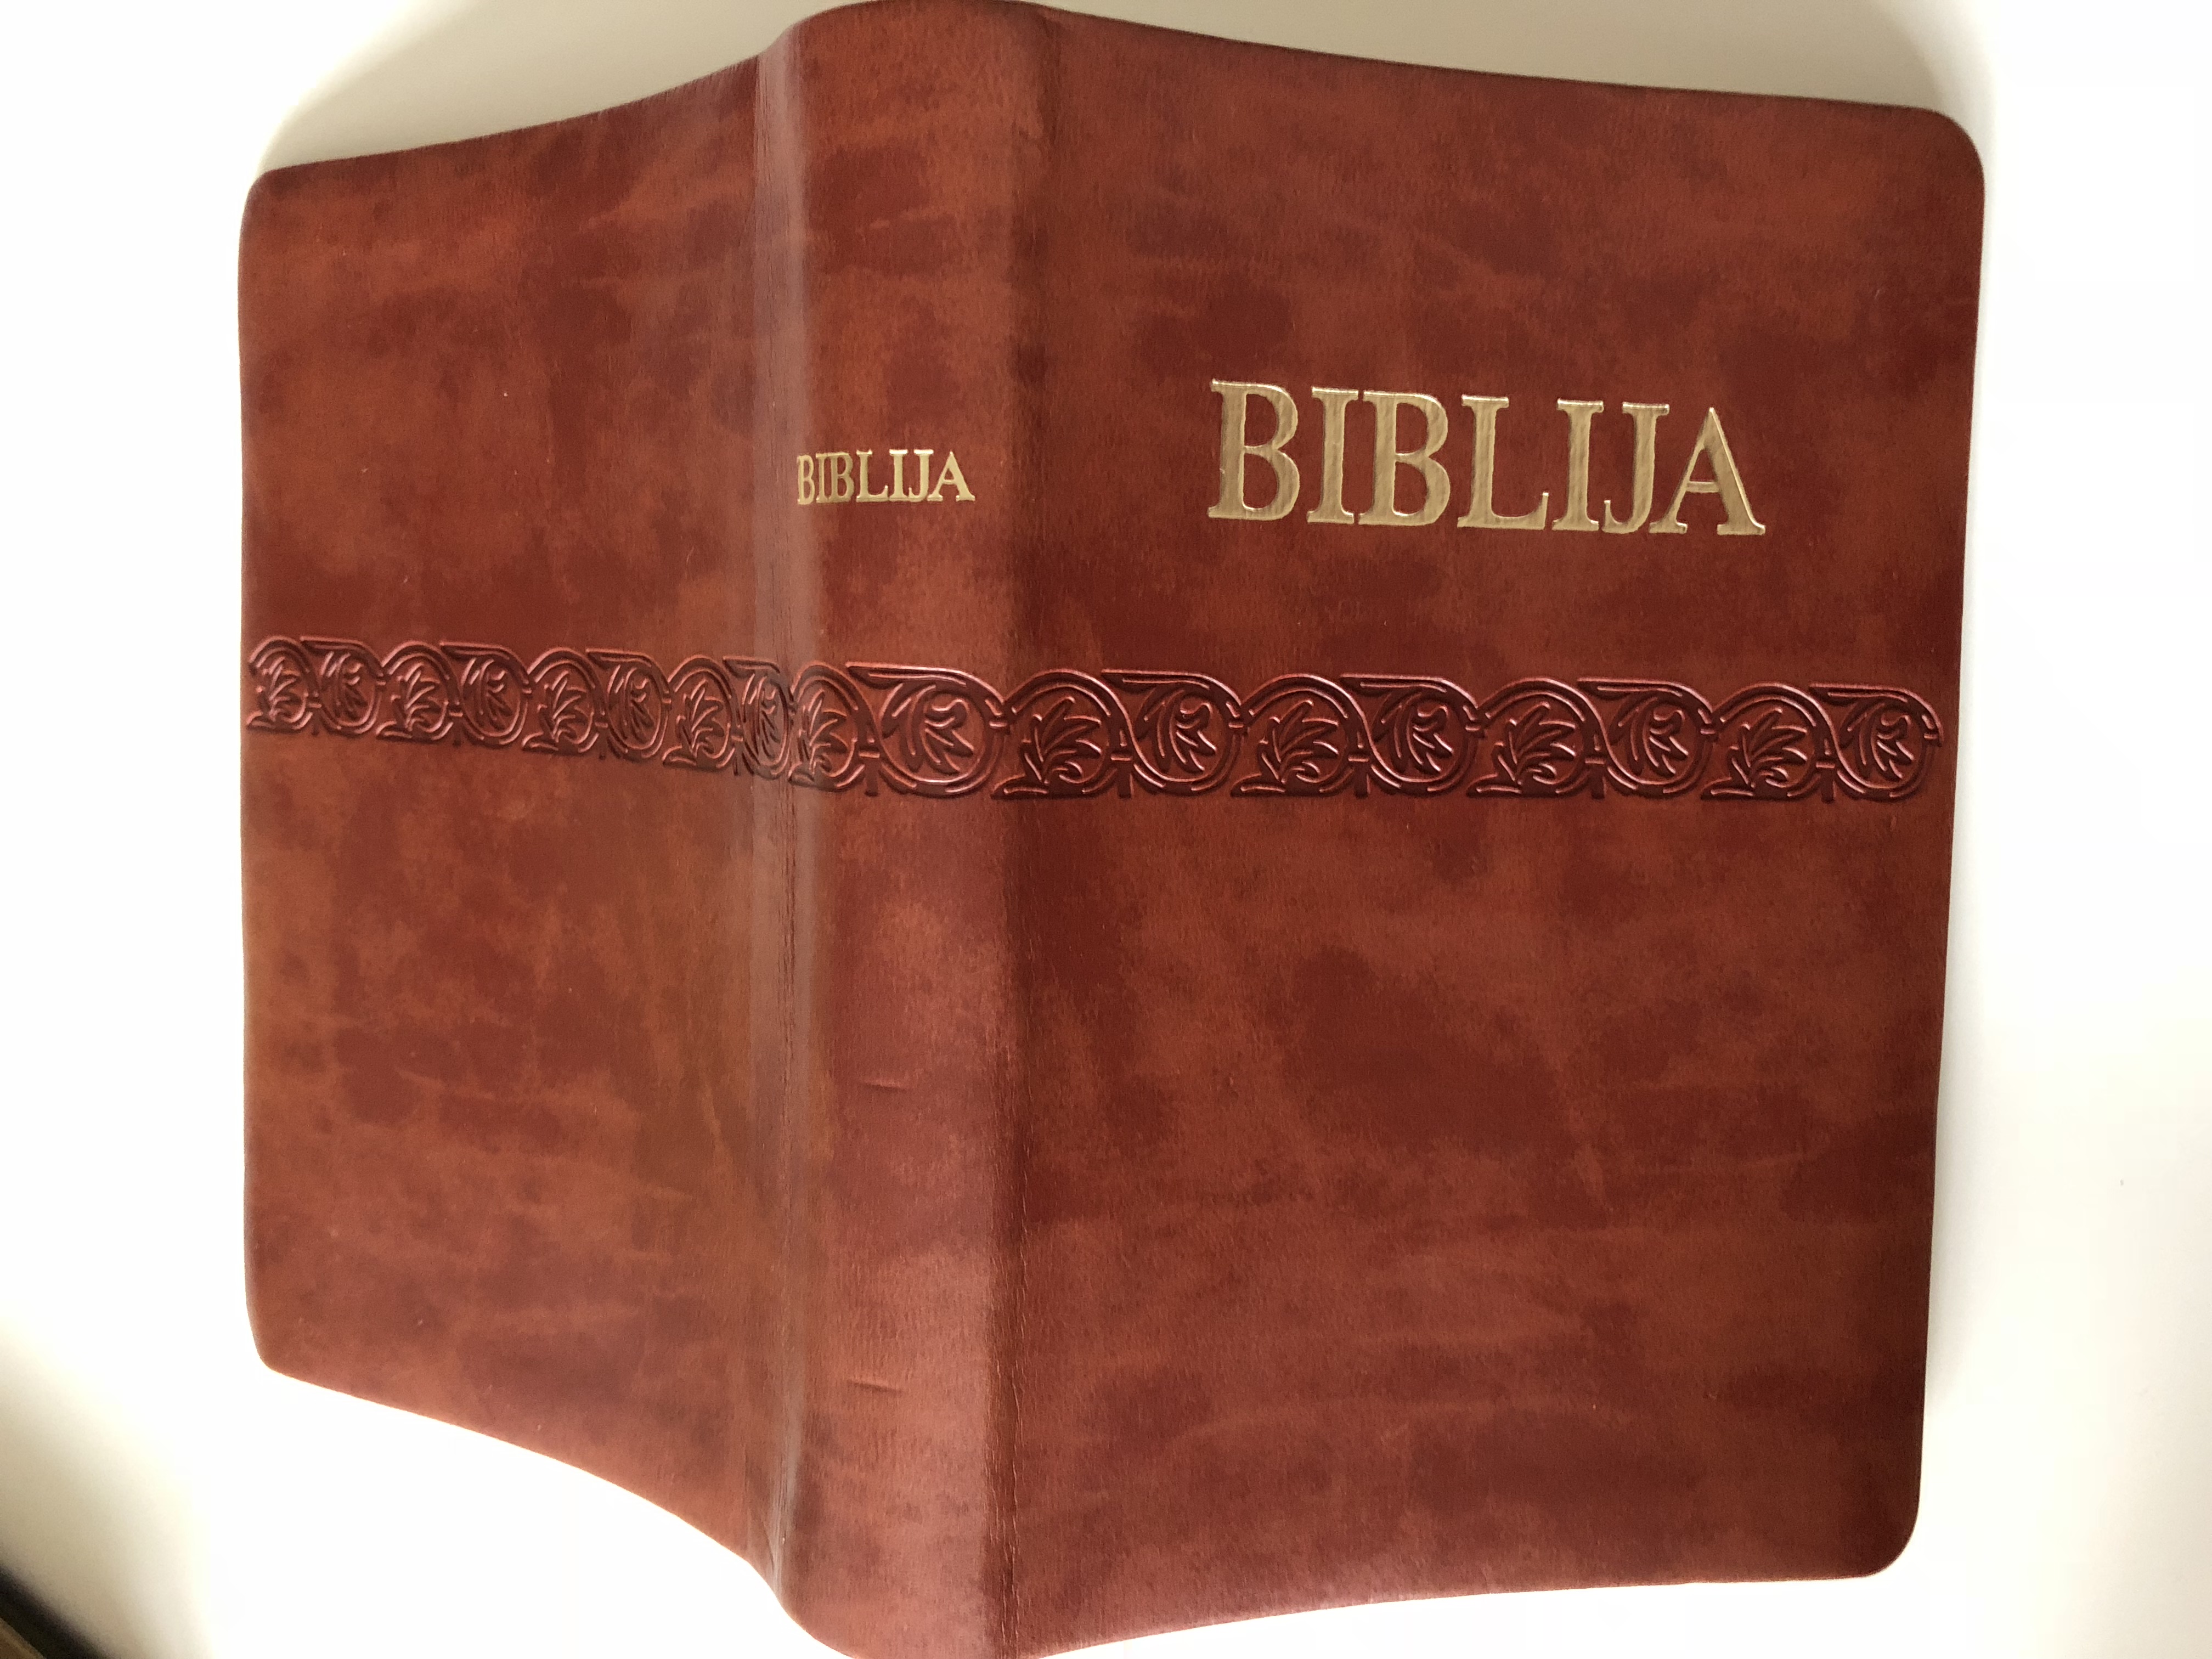 biblija-holy-bible-in-croatian-language-leather-bound-brown-golden-edges-sveto-pismo-staroga-i-novoga-zavjeta-1-.jpg